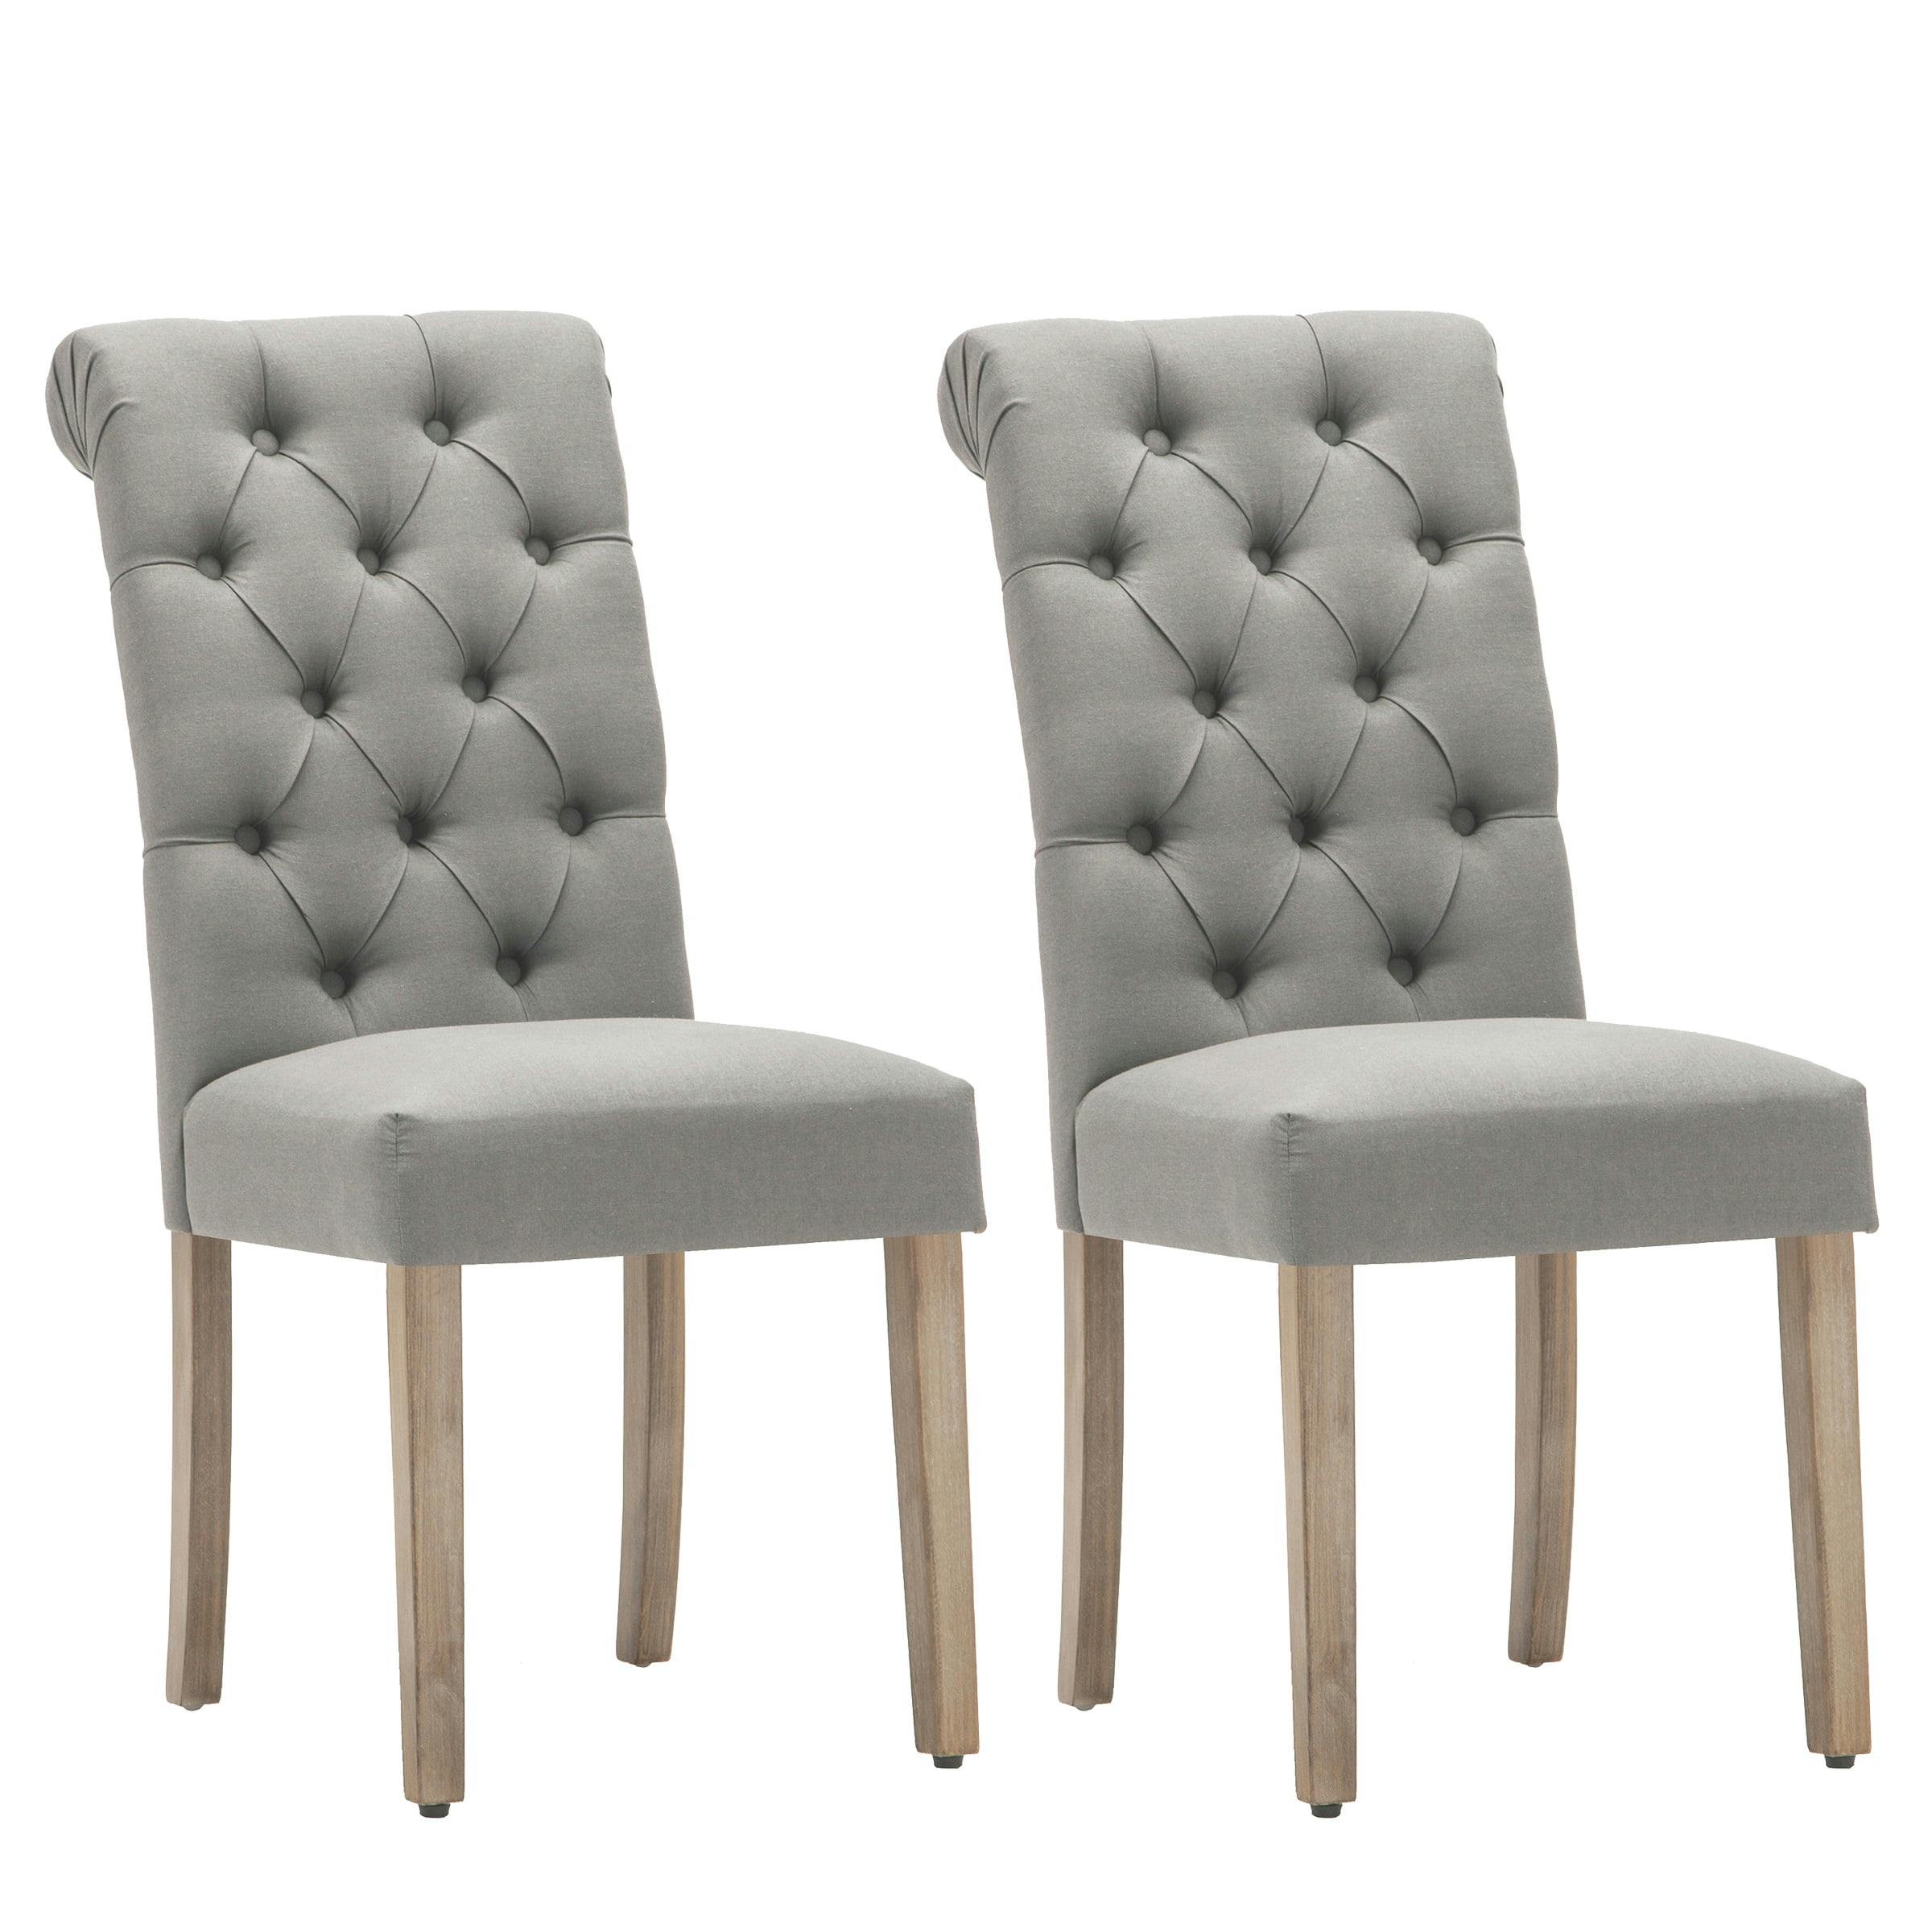 Jocelyn Roll Top Tufted Grey Linen Upholstered Side Chair